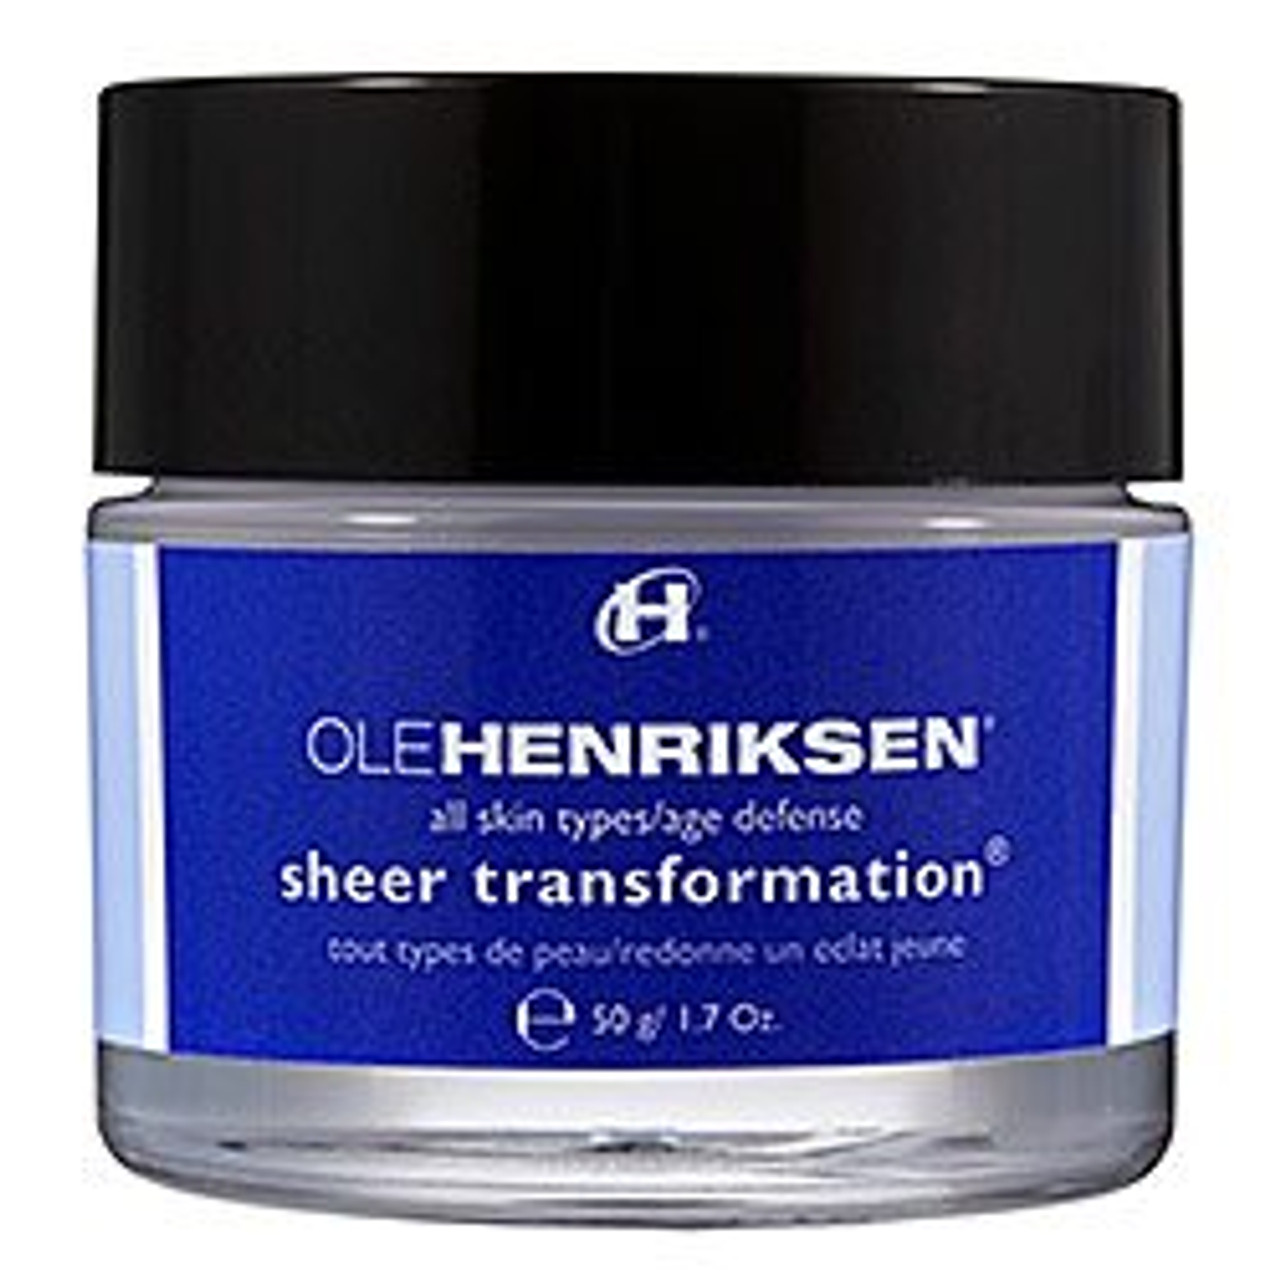 Ole Henriksen Sheer Transformation - 1.7 oz